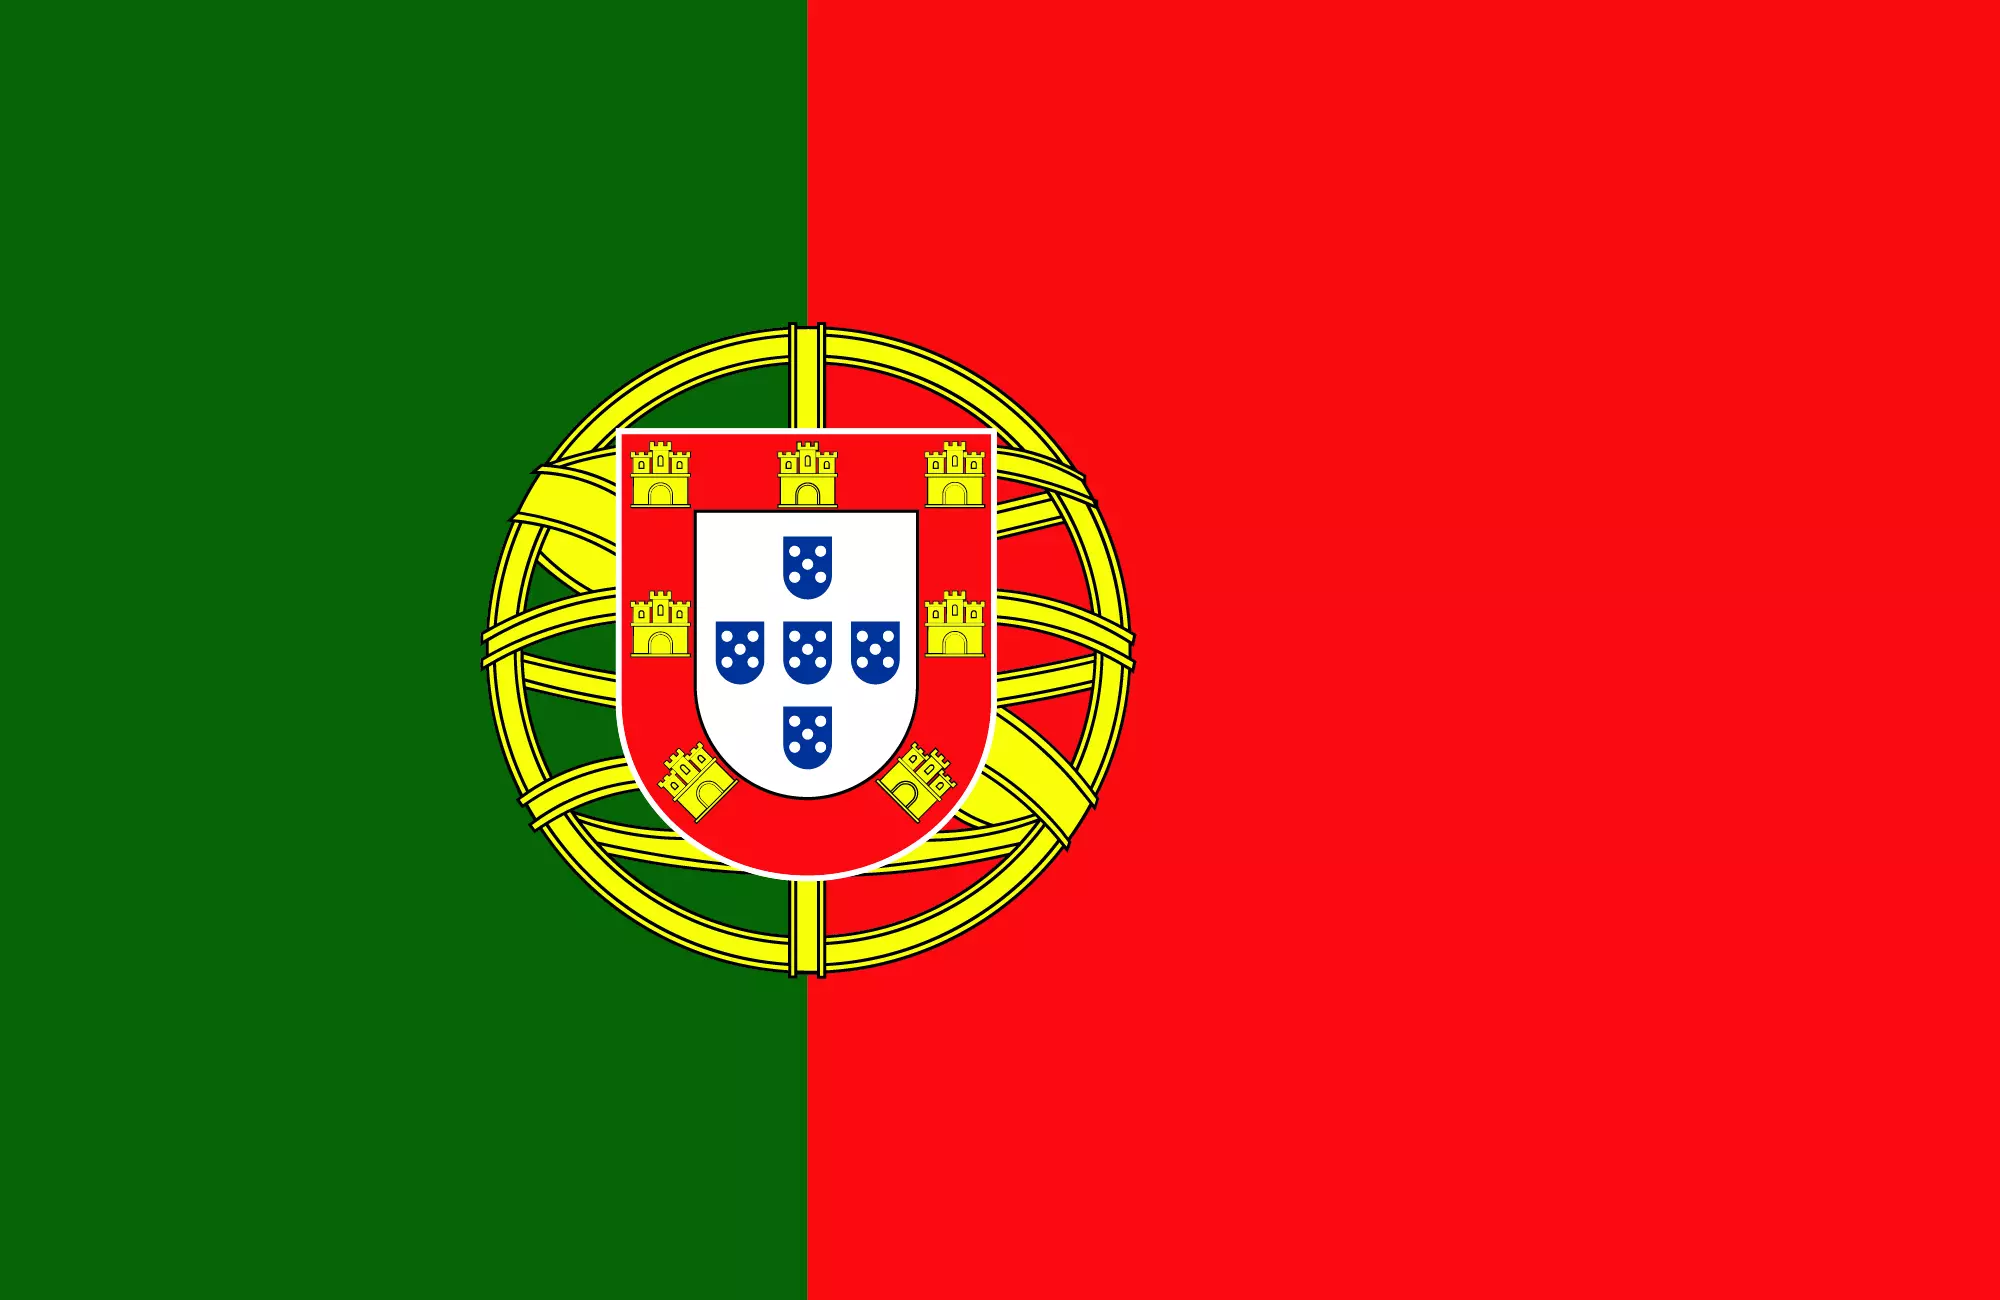 Encarga tu tesis doctoral en portugués